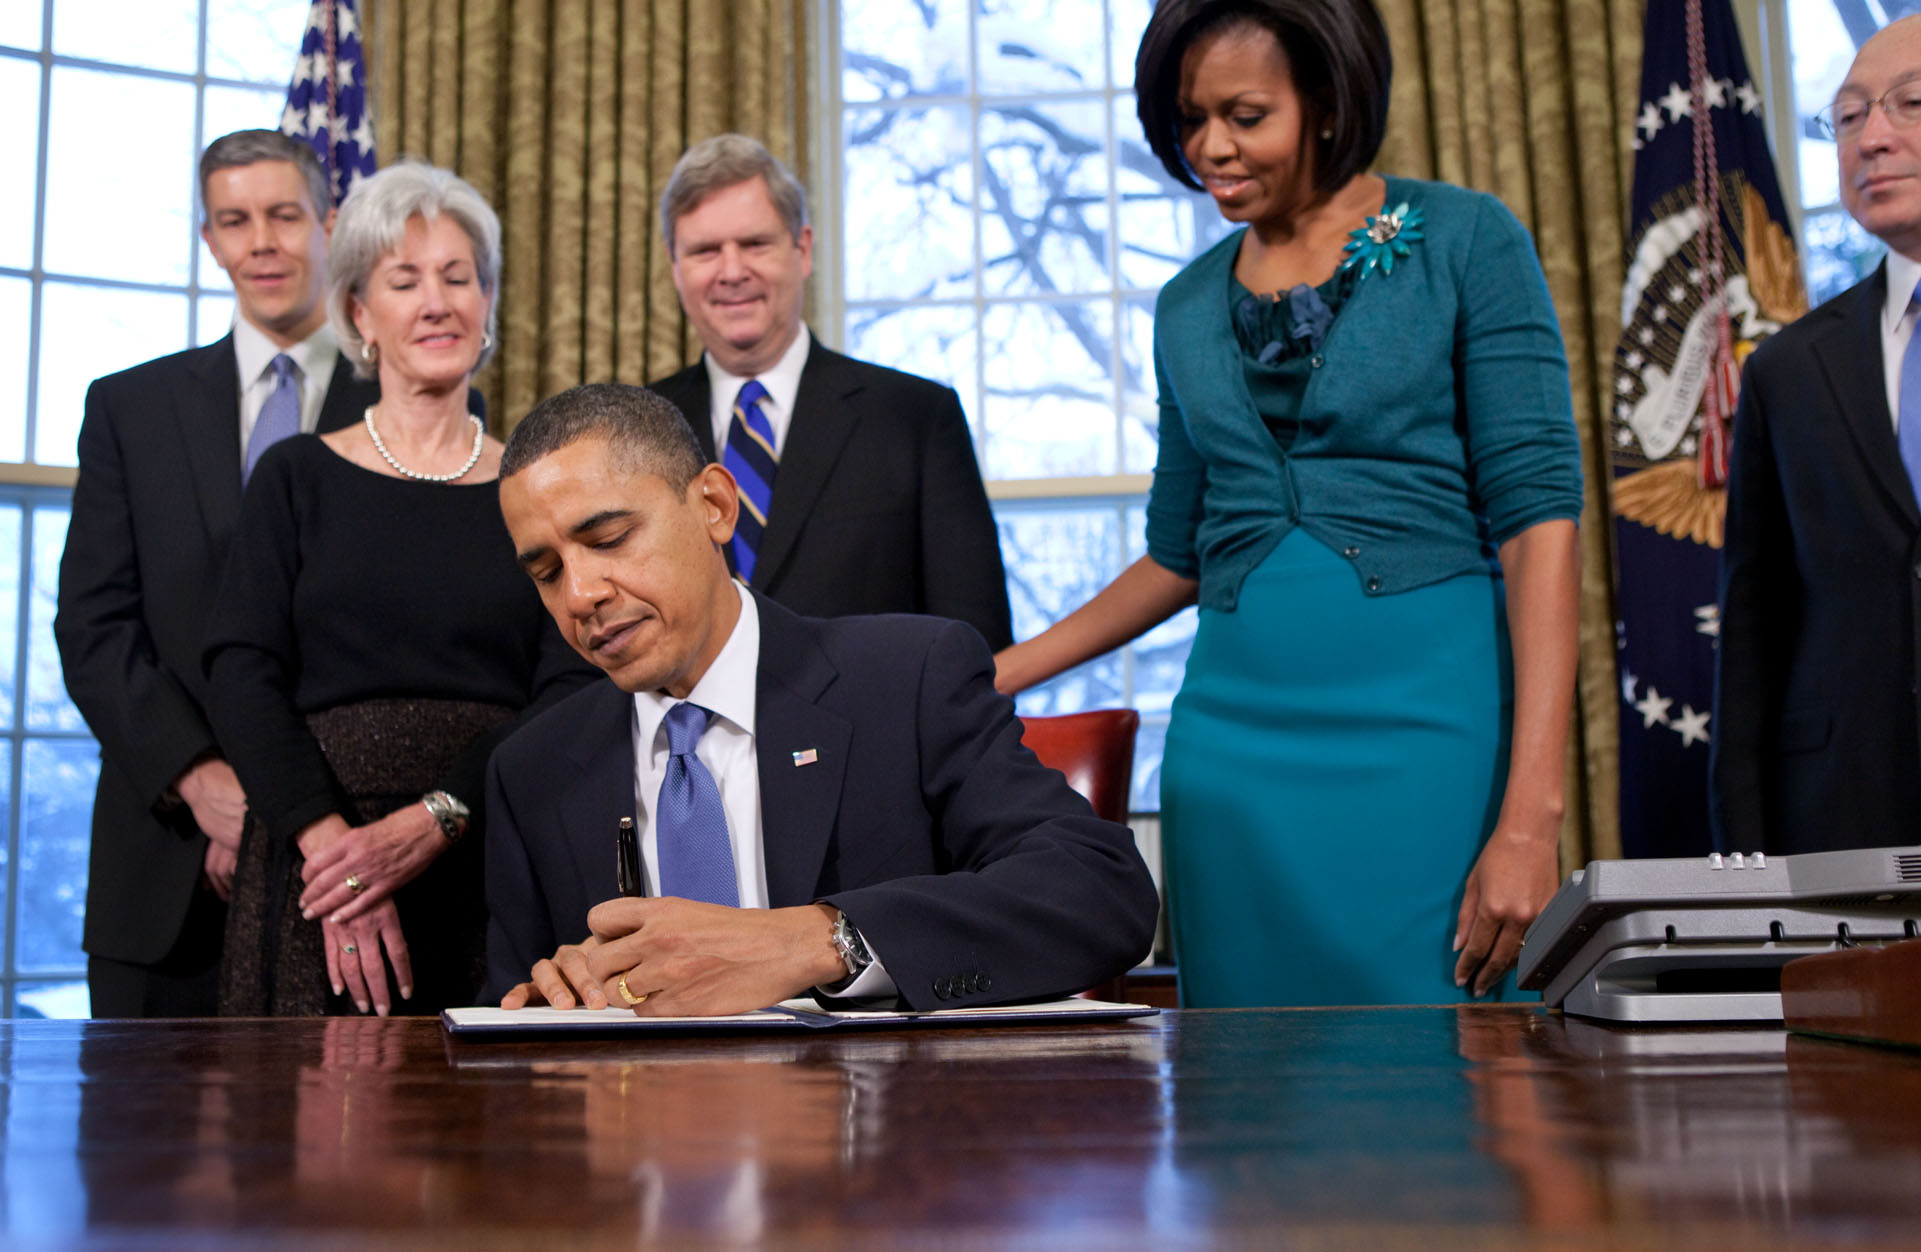 The President Signs a Memorandum Taking on Childhood Obesity